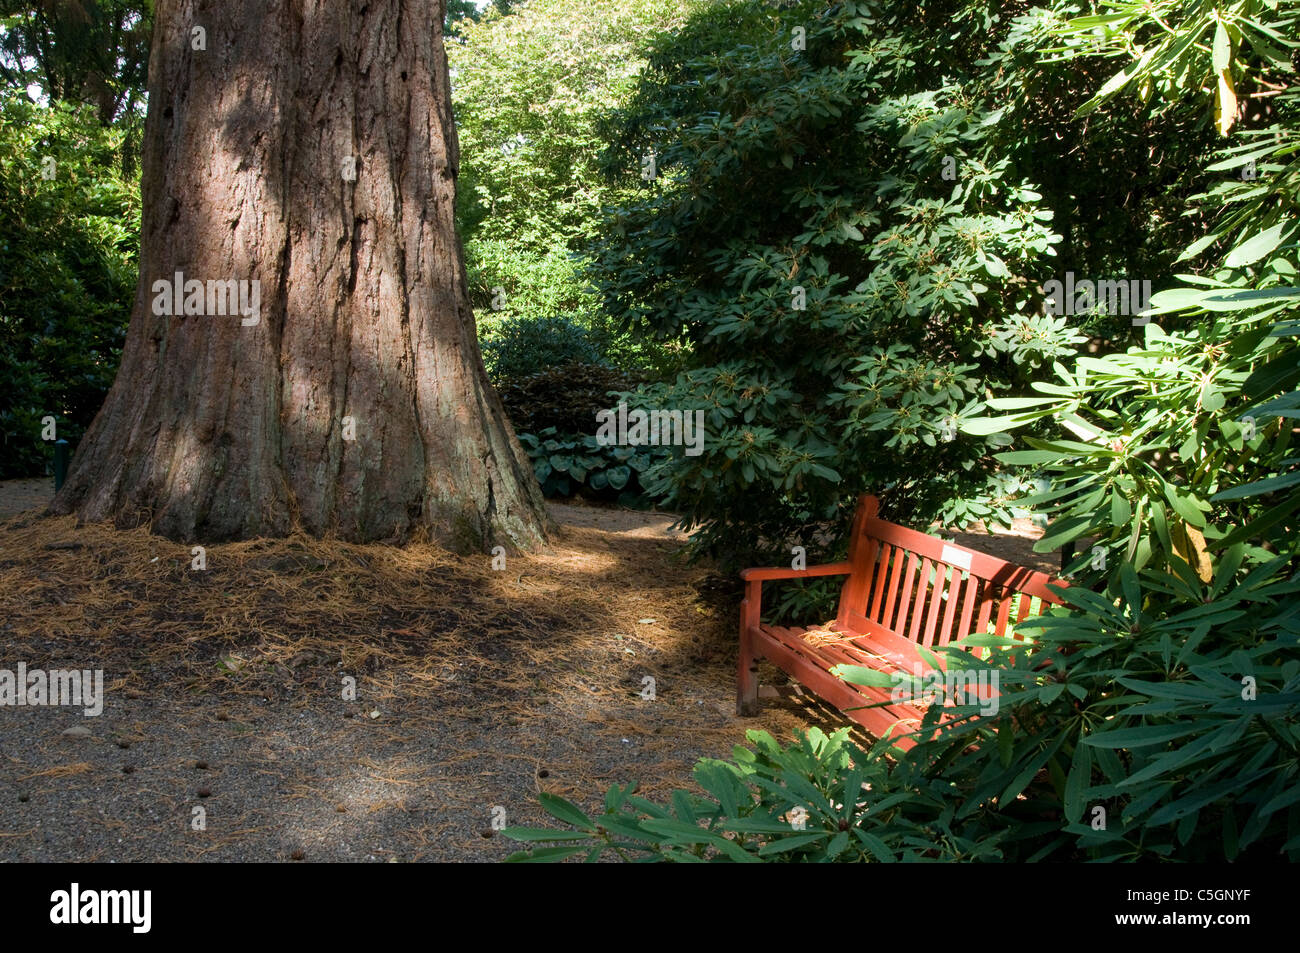 Base di albero di sequoia con red graden panchina Dawyck bosco giardino botanico Foto Stock